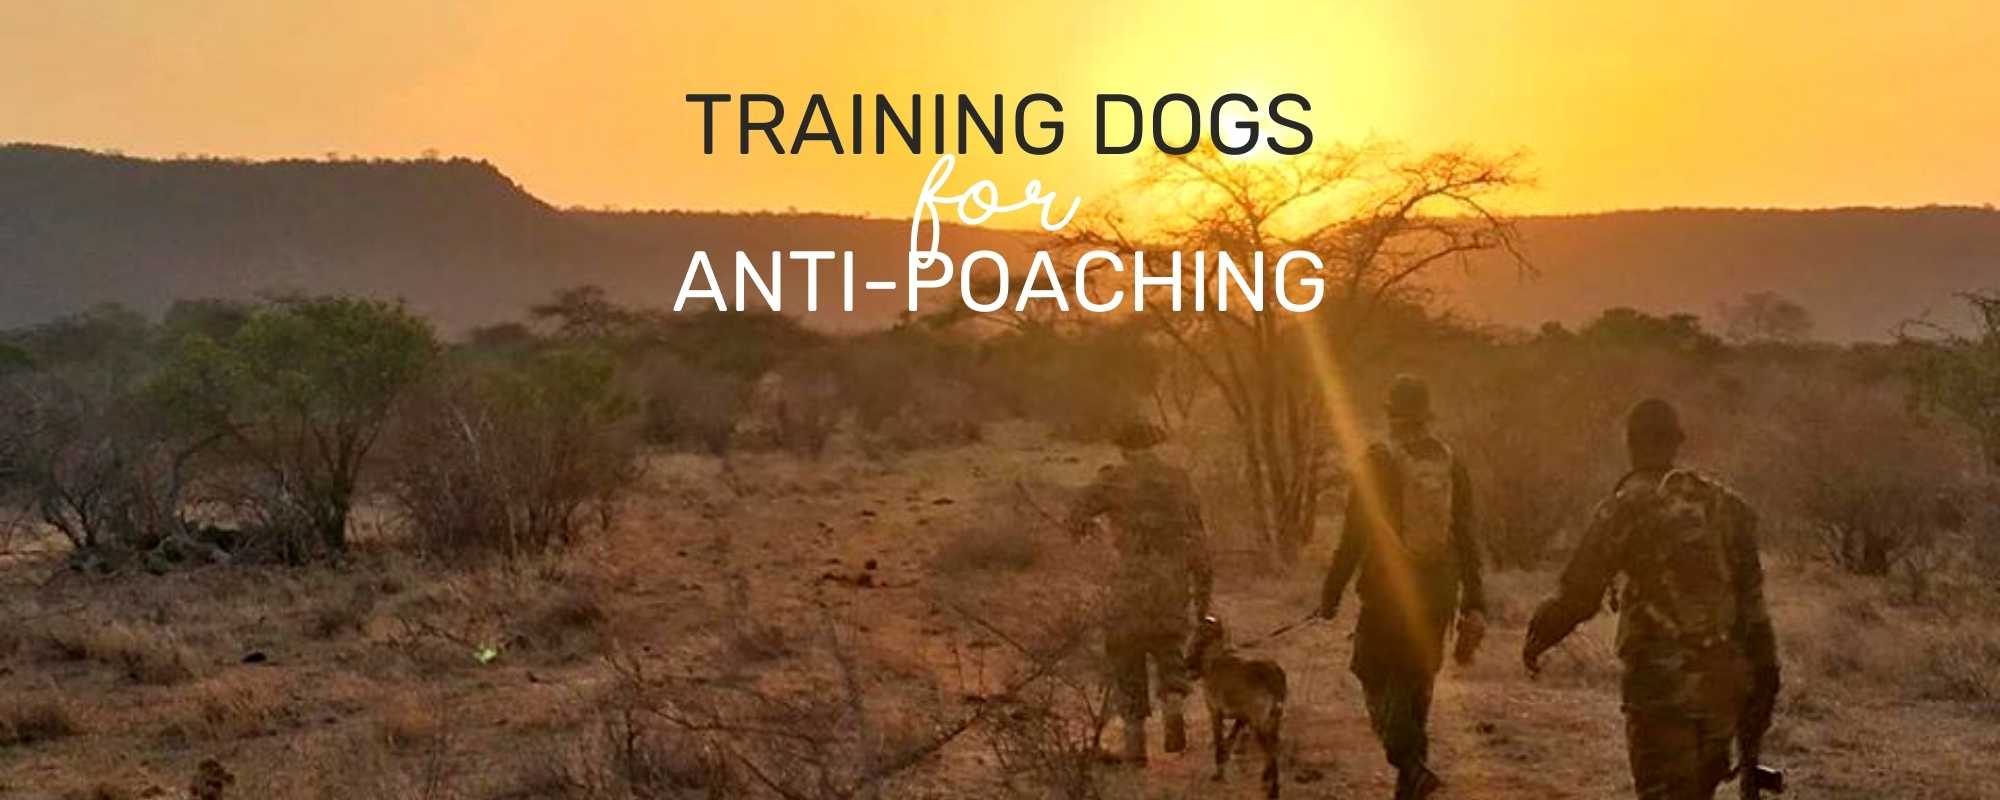 TRAINING DOGS FOR ANTI-POACHING